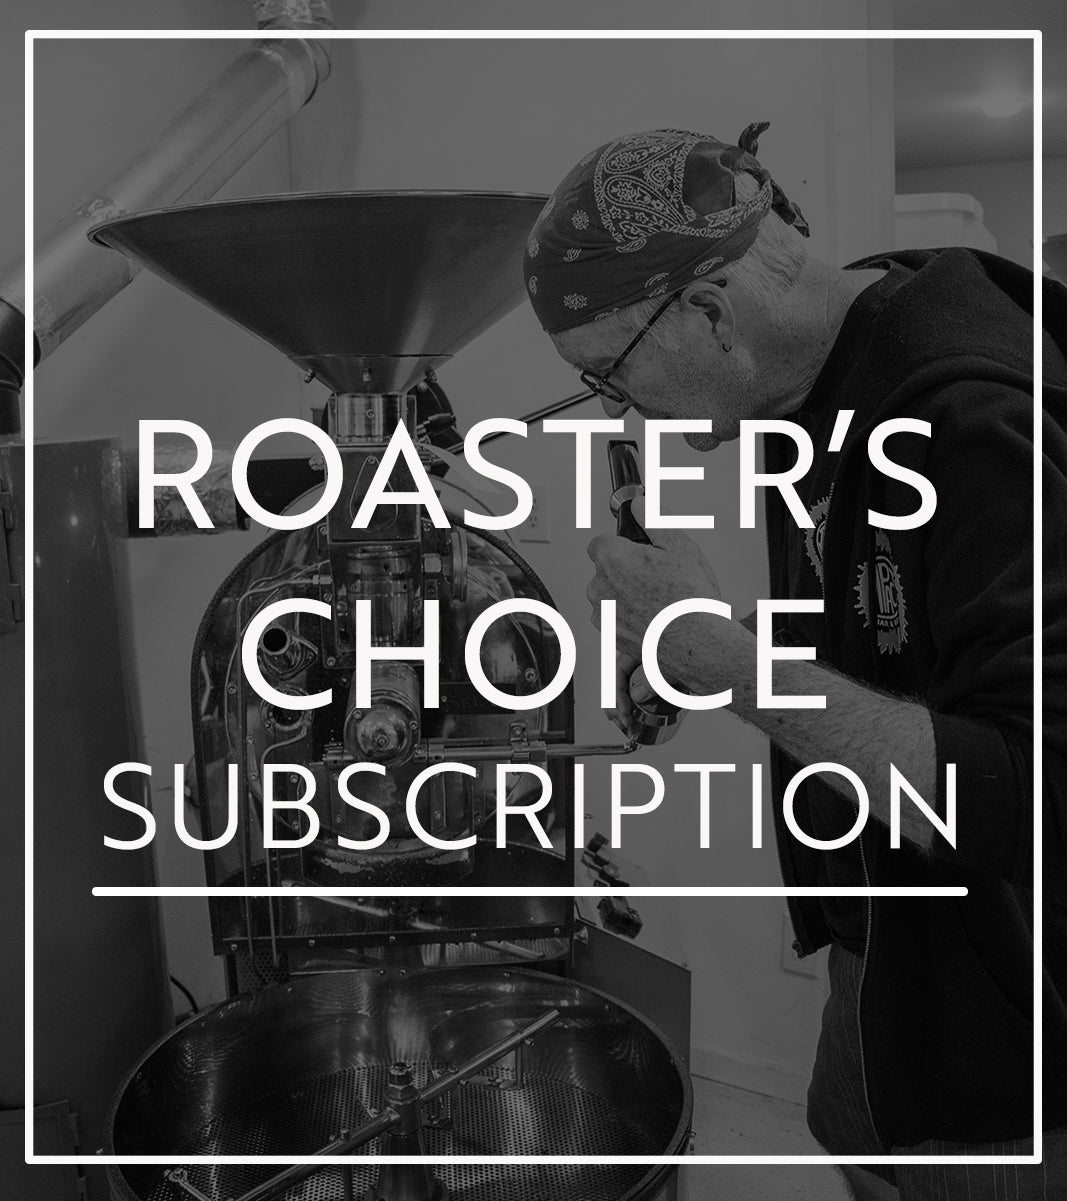 Roaster's Choice Coffee Subscription